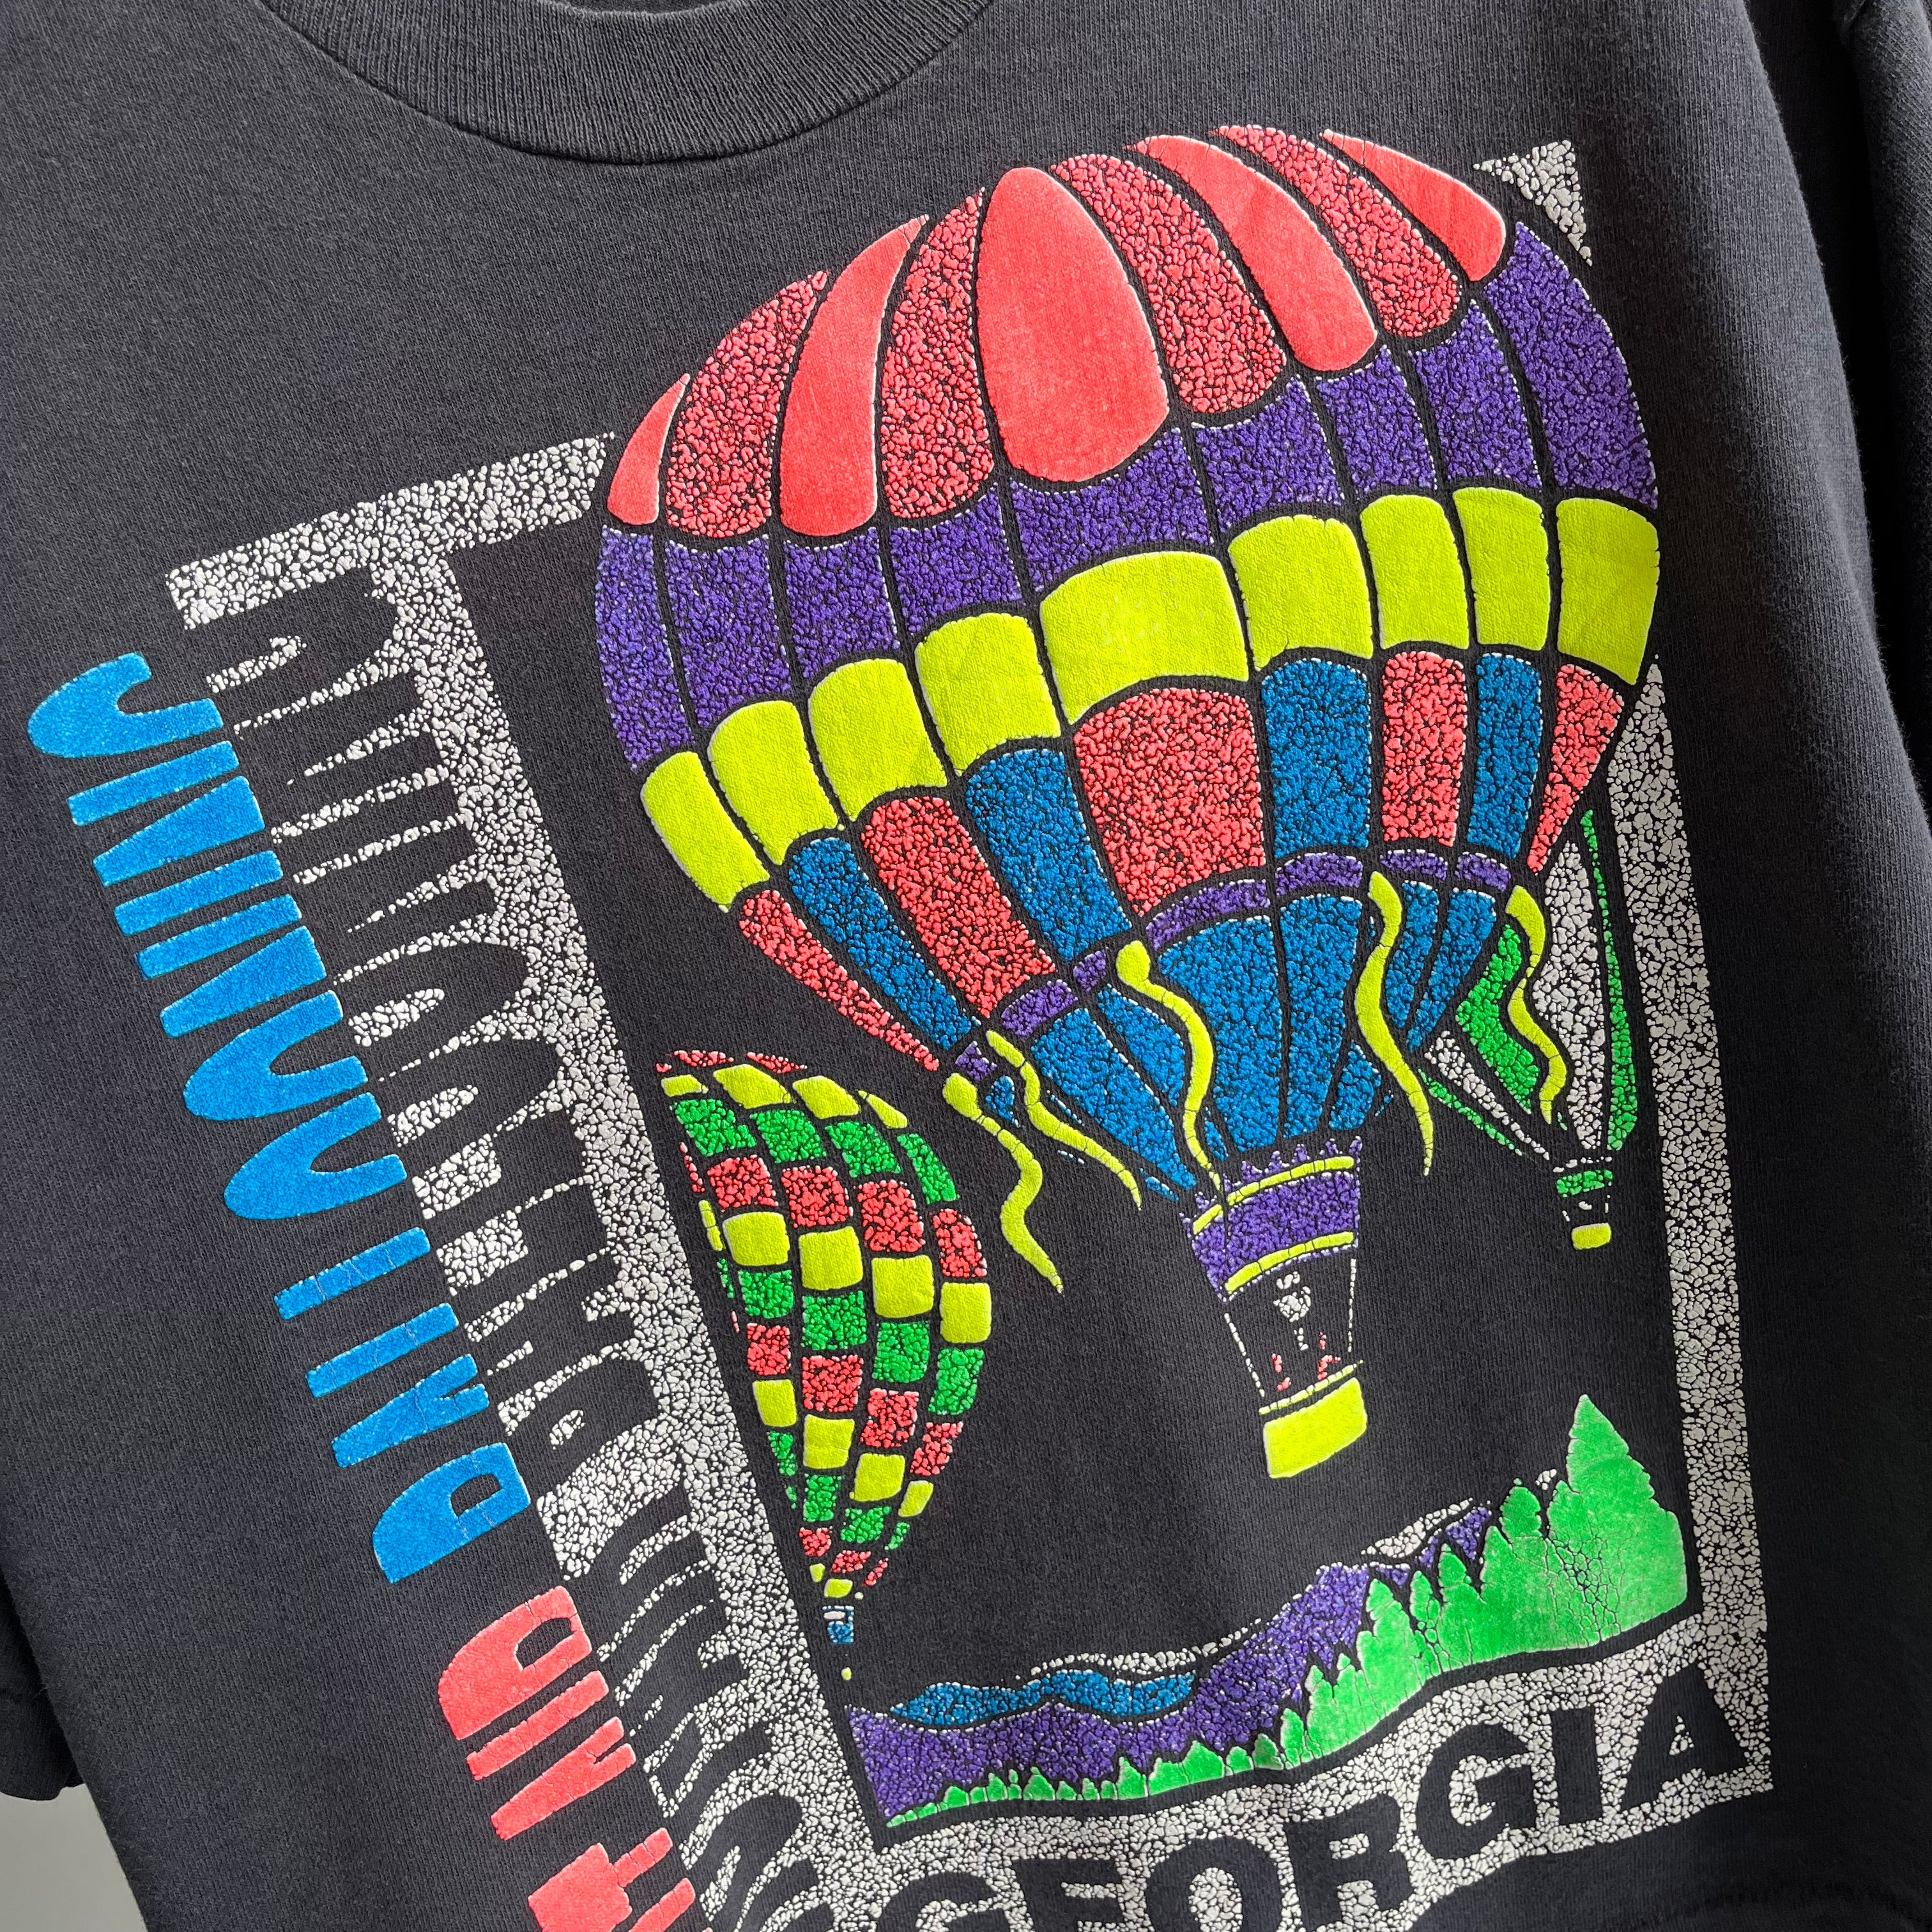 1980s Hot Air Ballooning Georgia Cropped T-Shirt